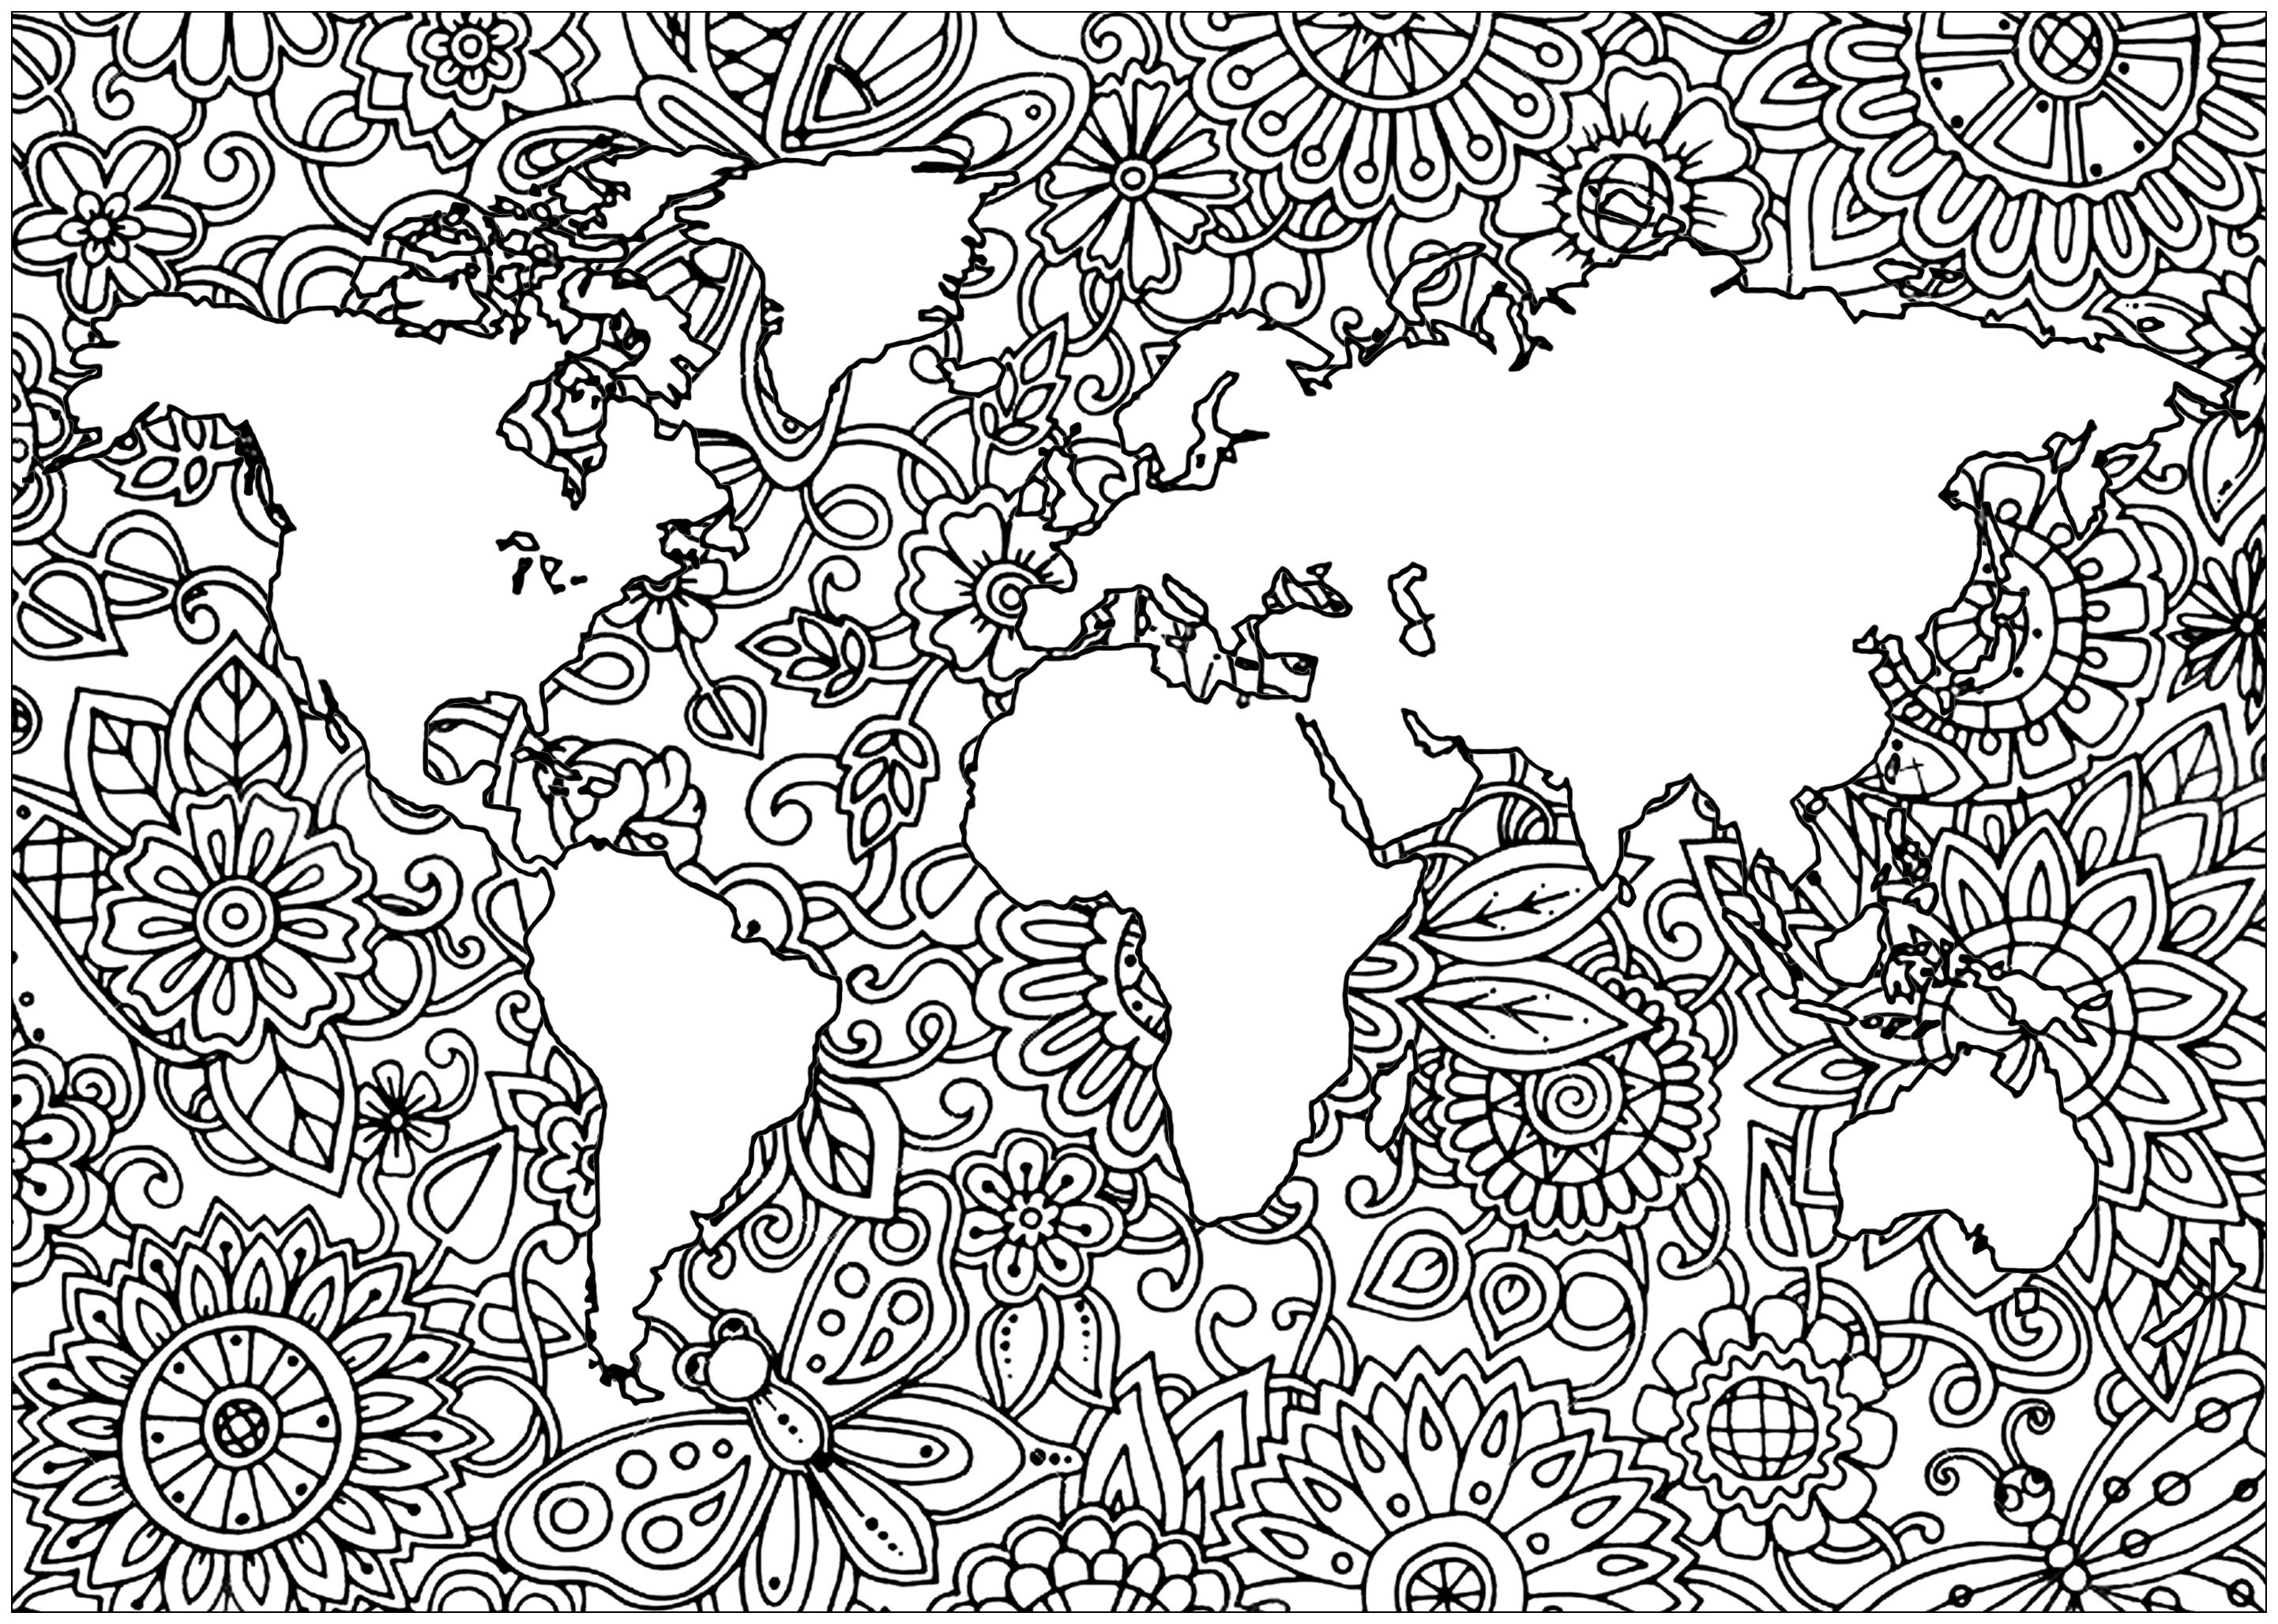 O planeta Terra e os seus continentes, com belas flores nos mares, Artista : Art'Isabelle